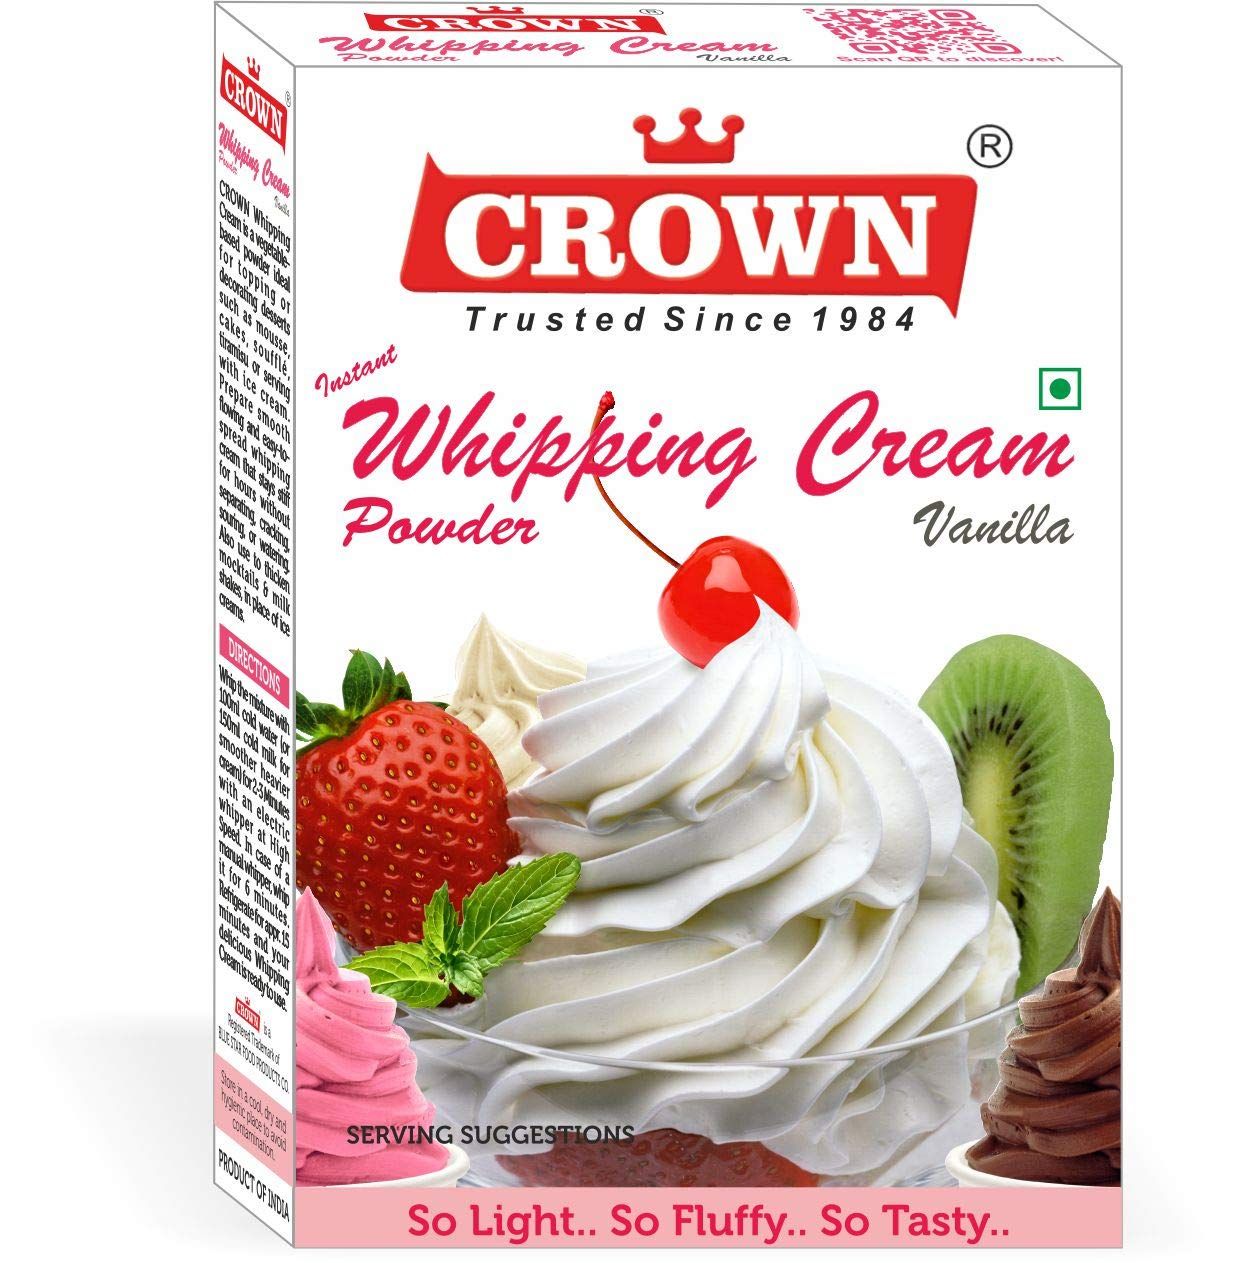 Crown Whipping Cream Powder Image